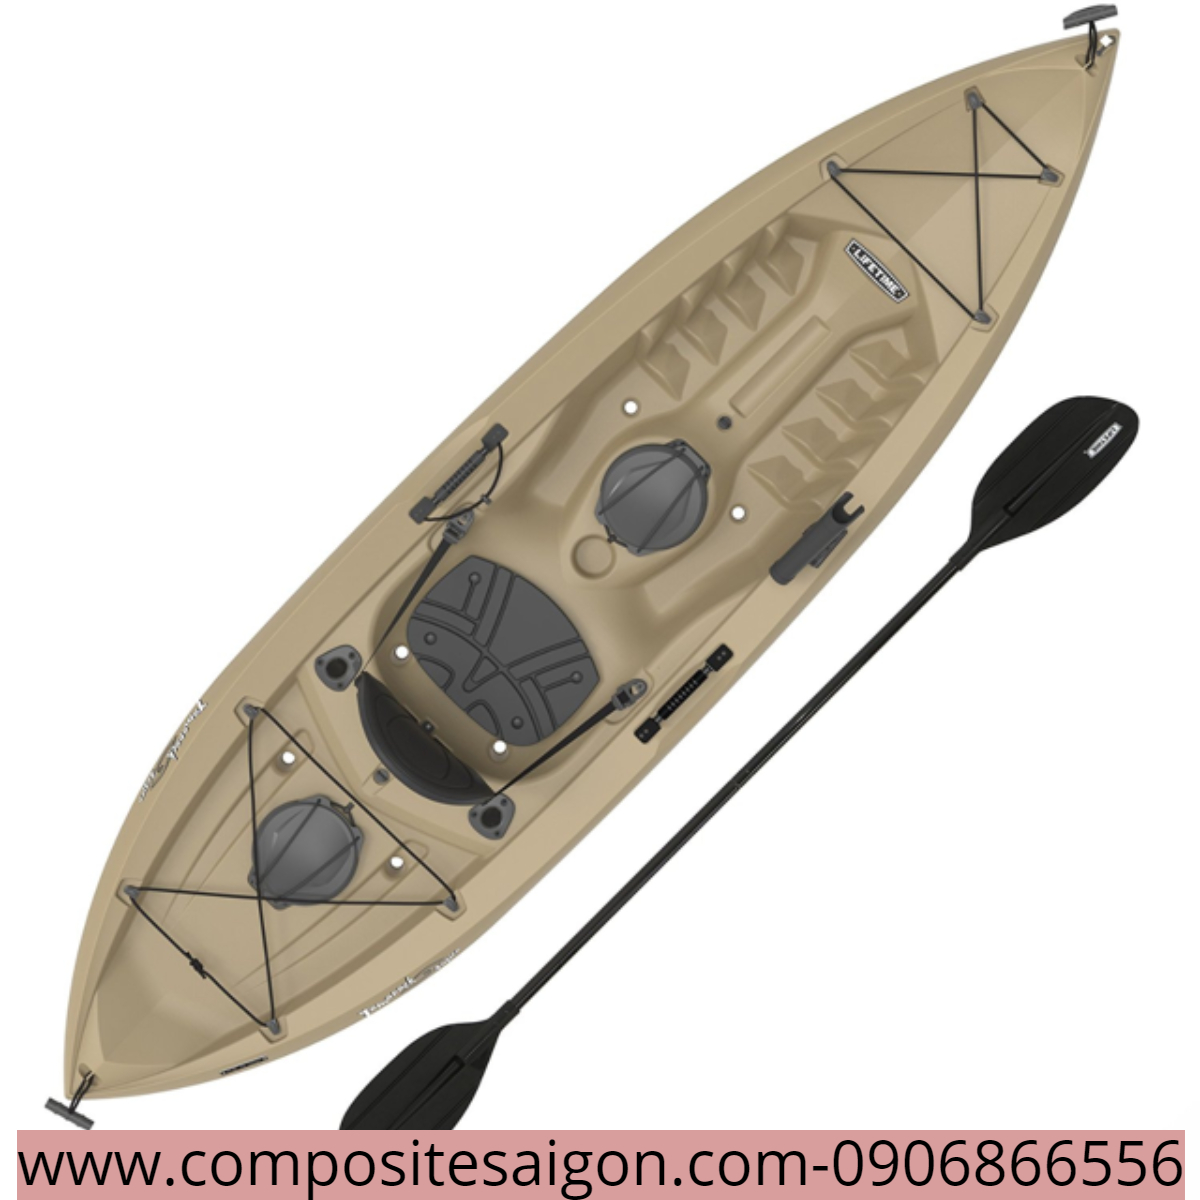 thuyền kayak, mua thuyền kayak, thuyền kayak đi câu, thuyền kayak đơn, thuyền kayak chất liệu composite, thuyền kayak đẹp